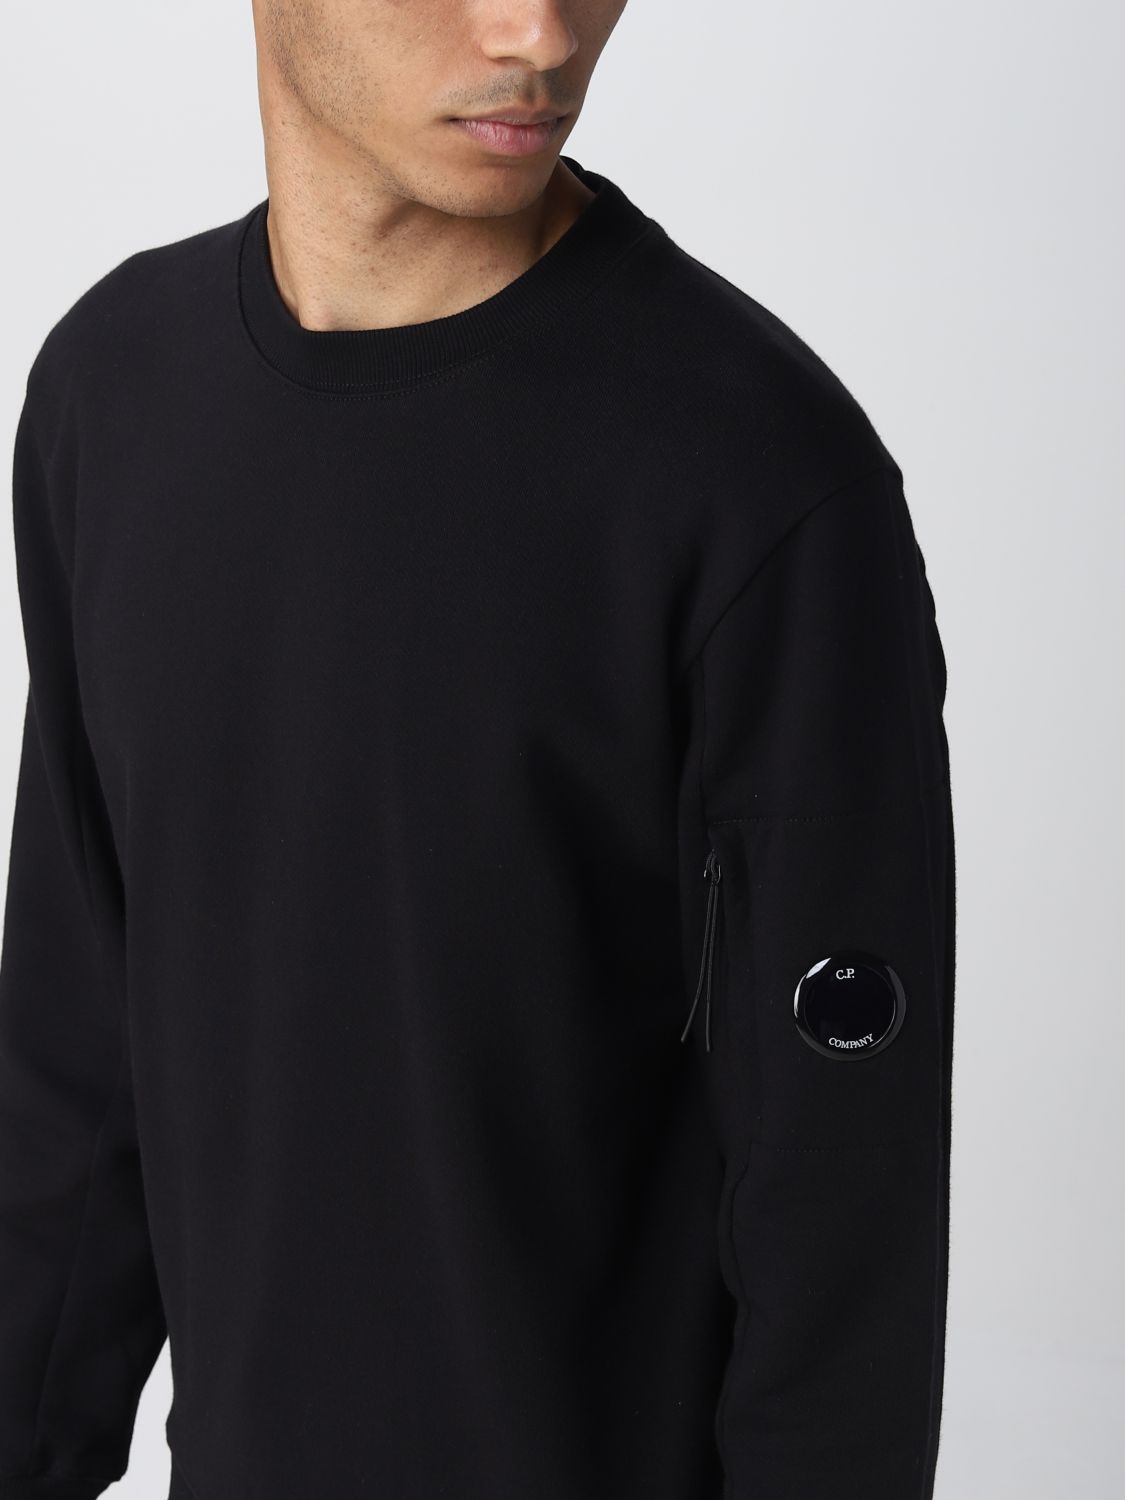 C.P. COMPANY: sweatshirt for man - Black | C.p. Company sweatshirt ...